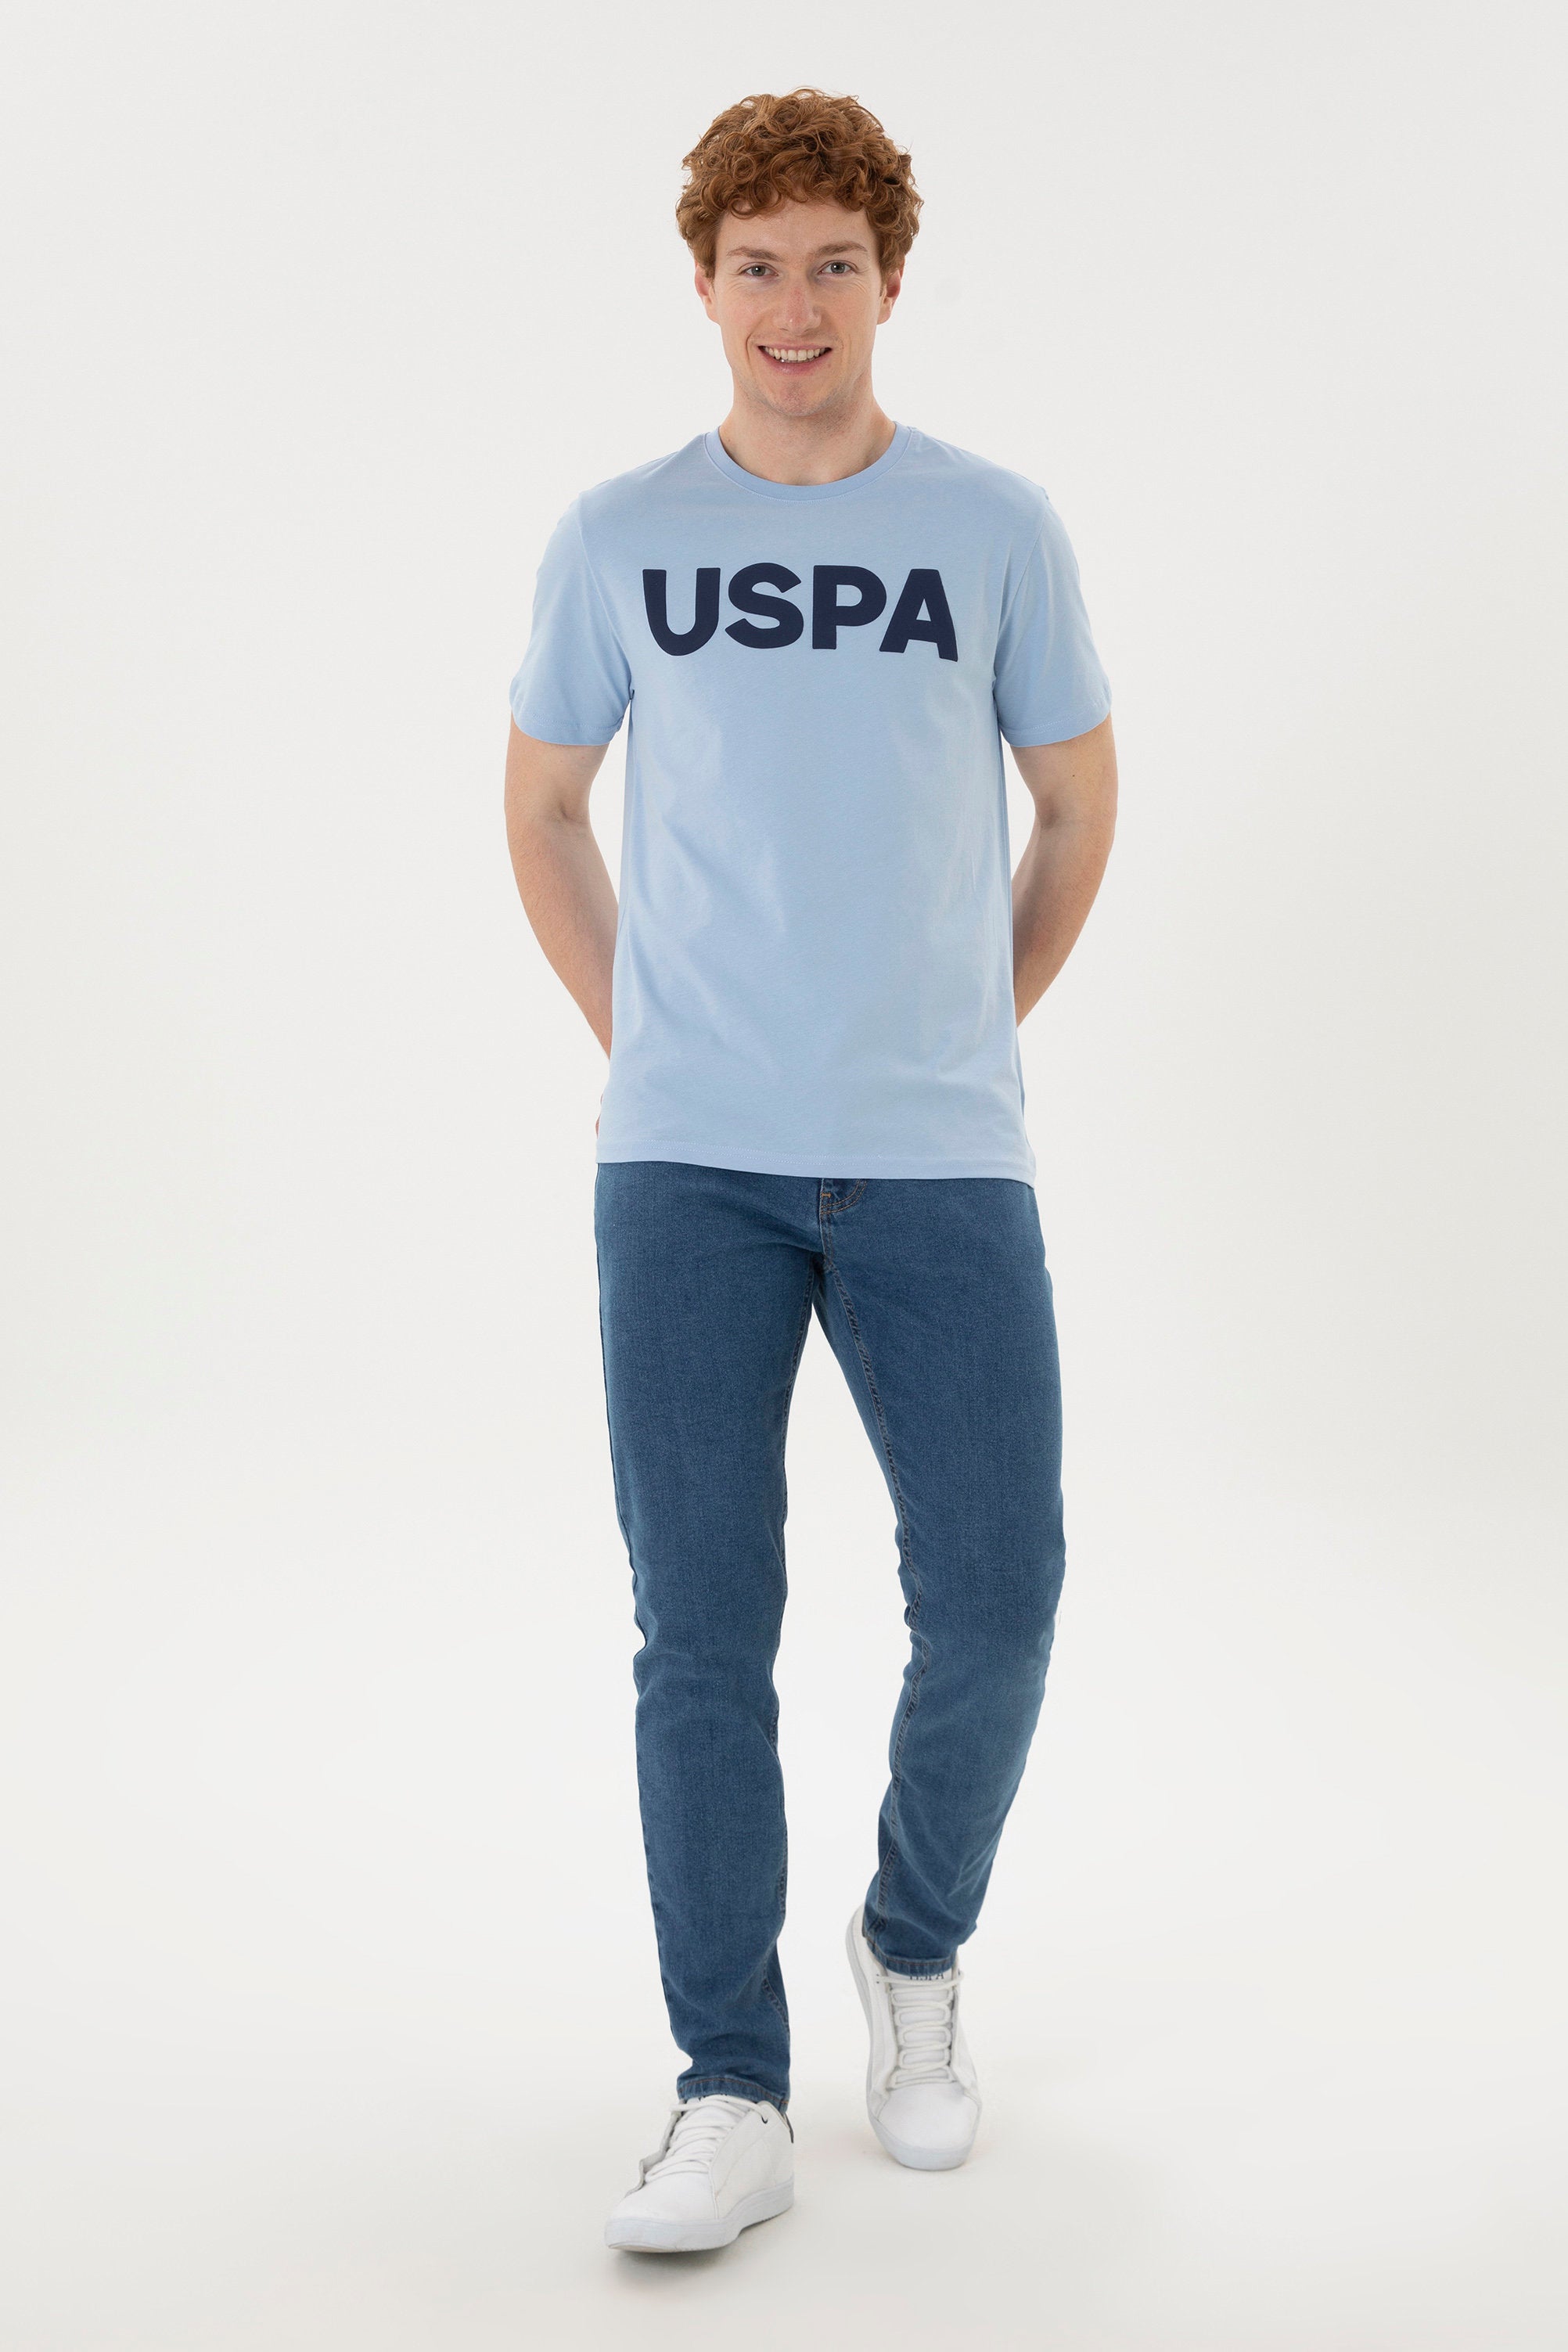 Round Neck T-Shirt With Uspa Logo_G081SZ0110 1795459_VR003_04